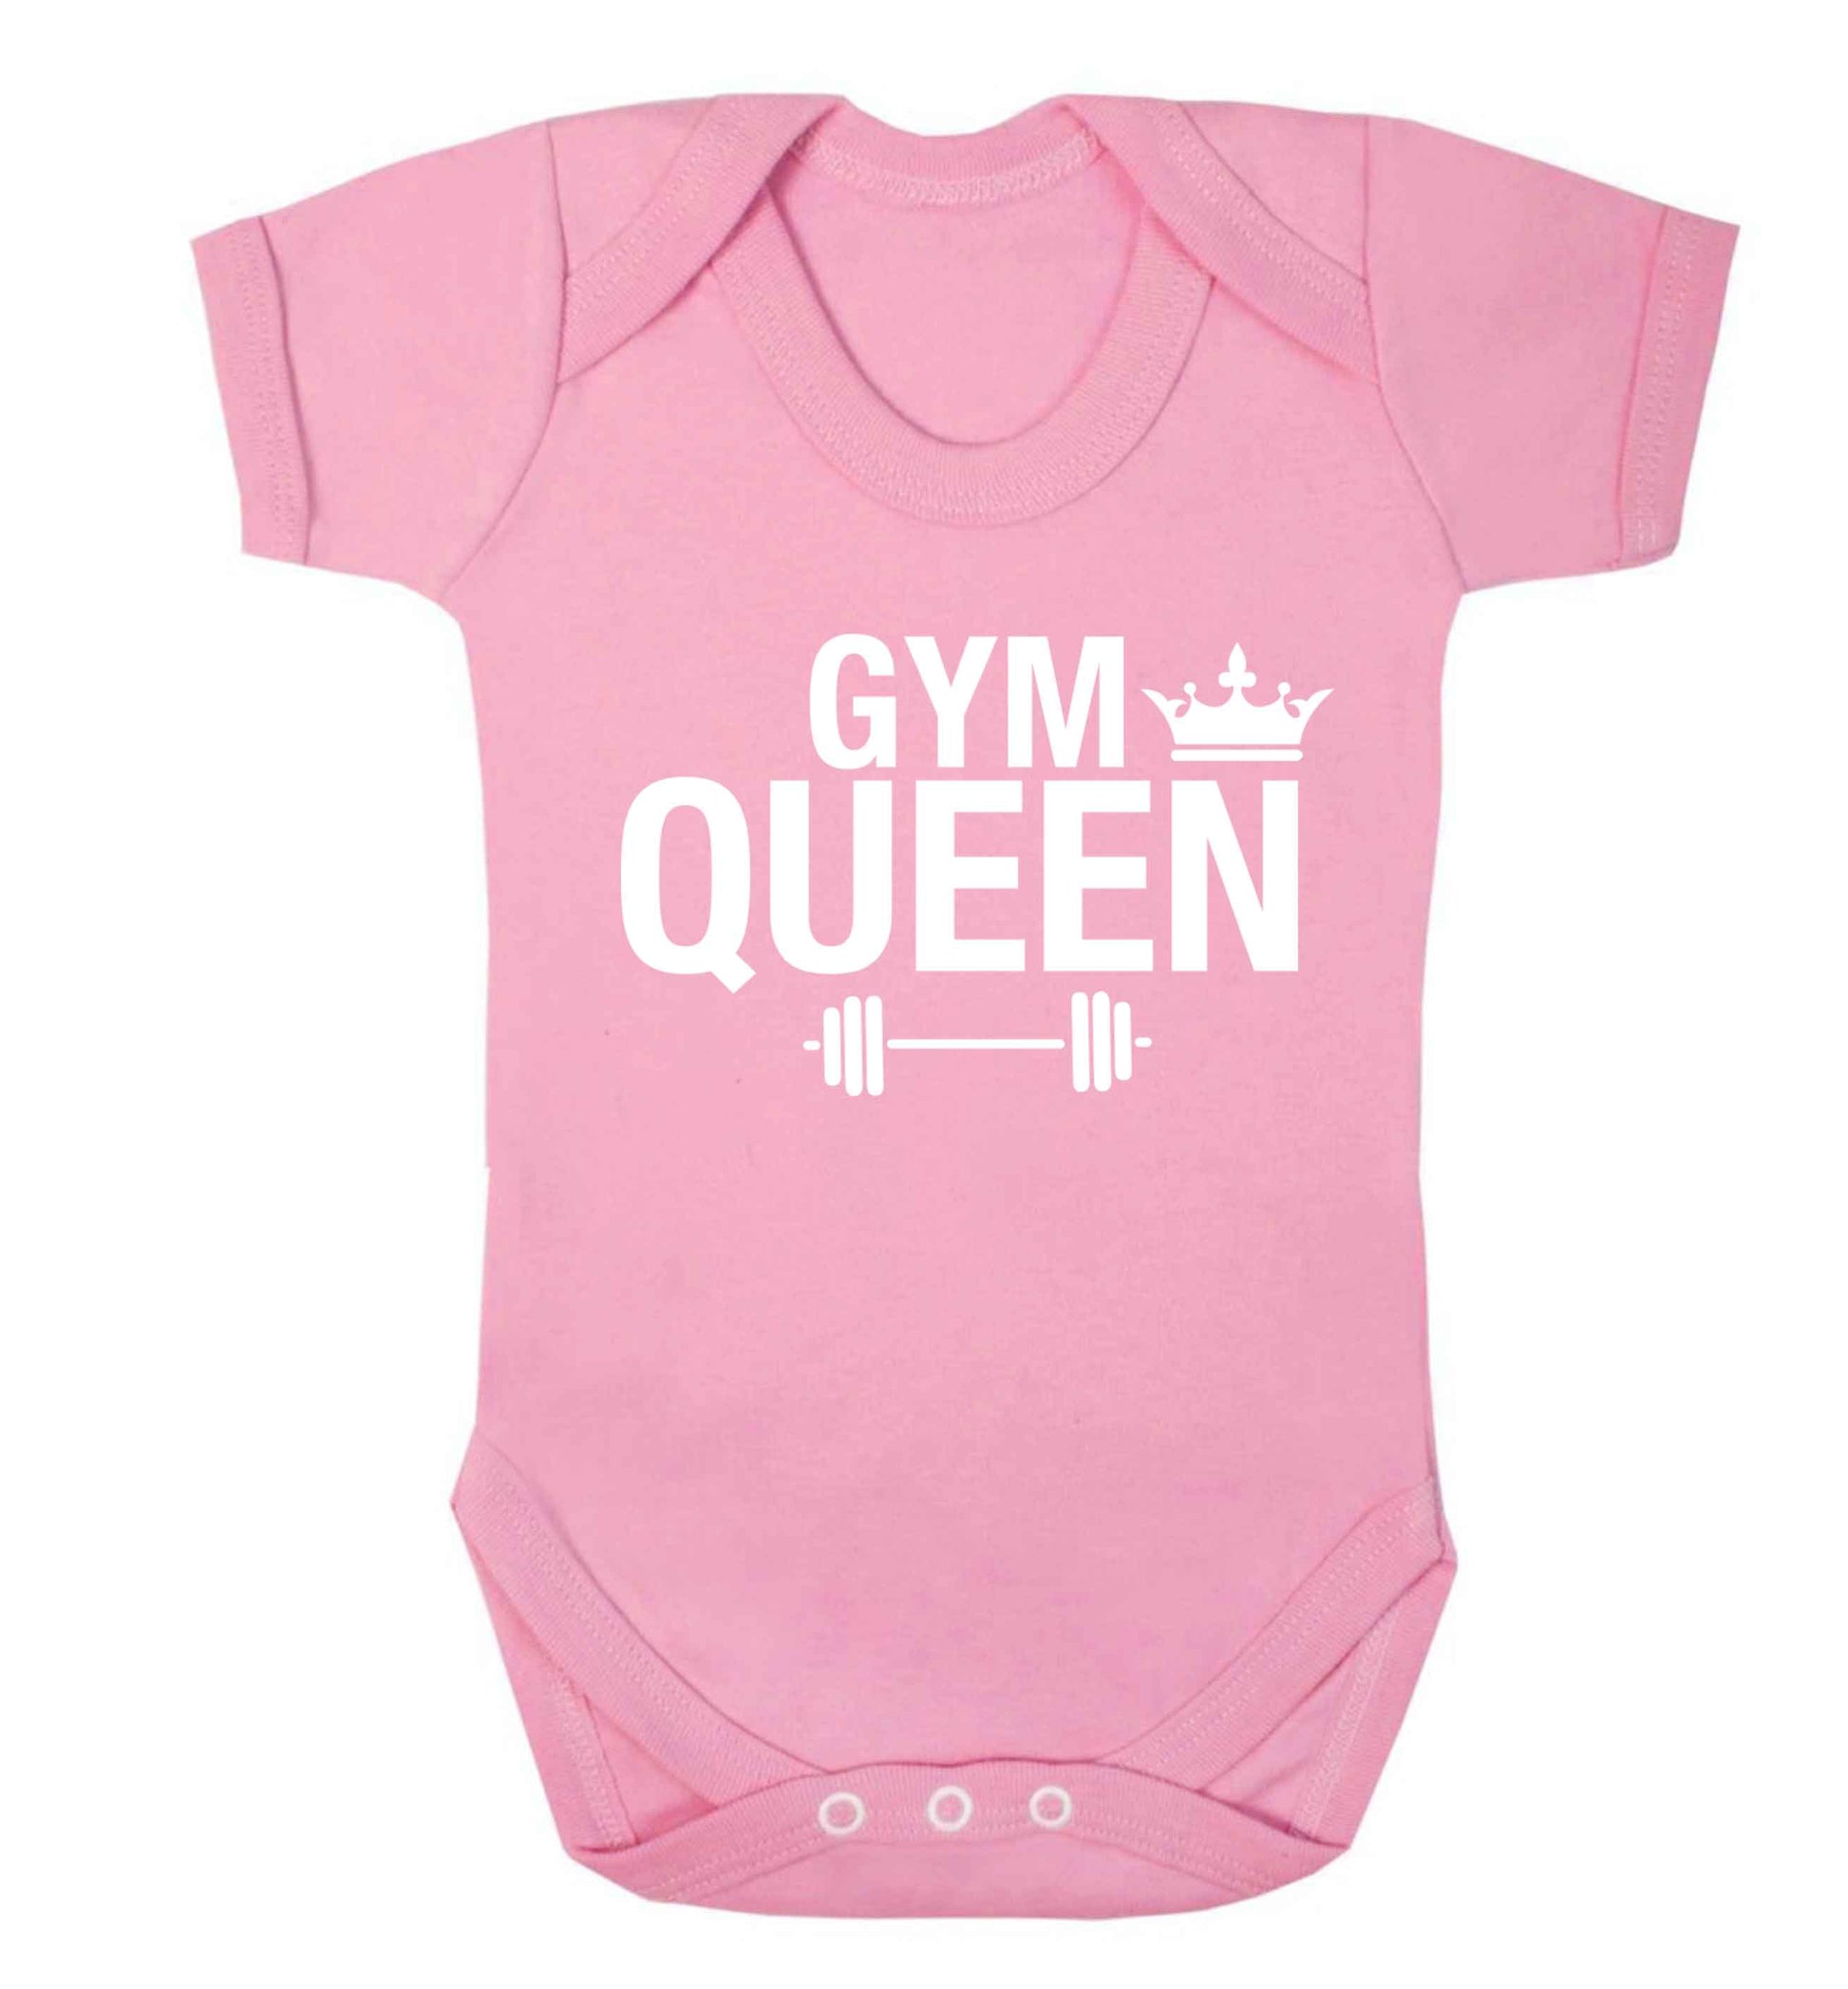 Gym queen Baby Vest pale pink 18-24 months